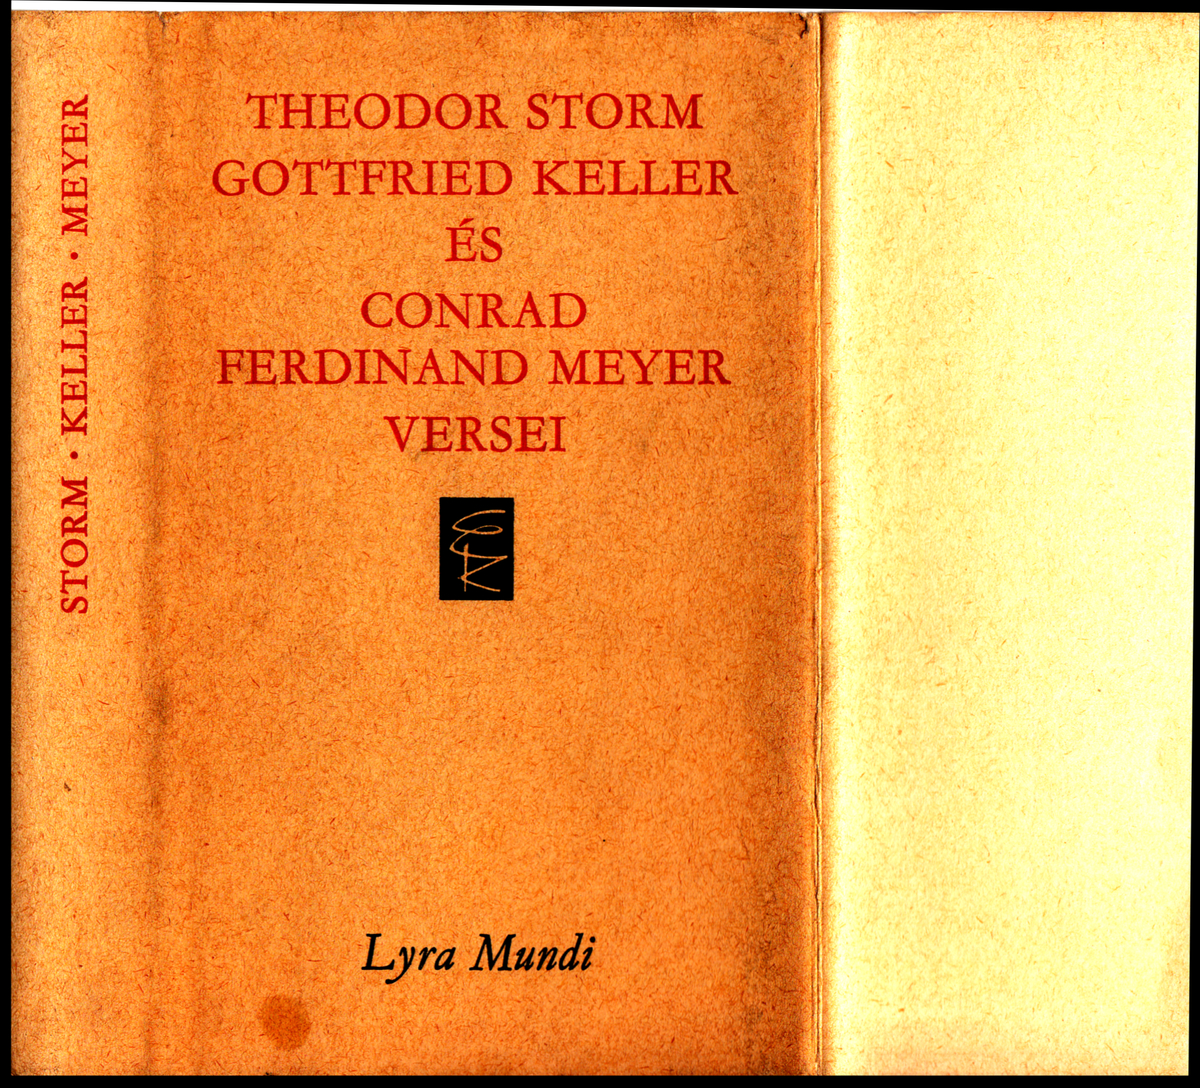 Storm, Theodor: Theodor Storm, Gottfried Keller és Conrad Ferdinand Meyer versei | Library OPAC